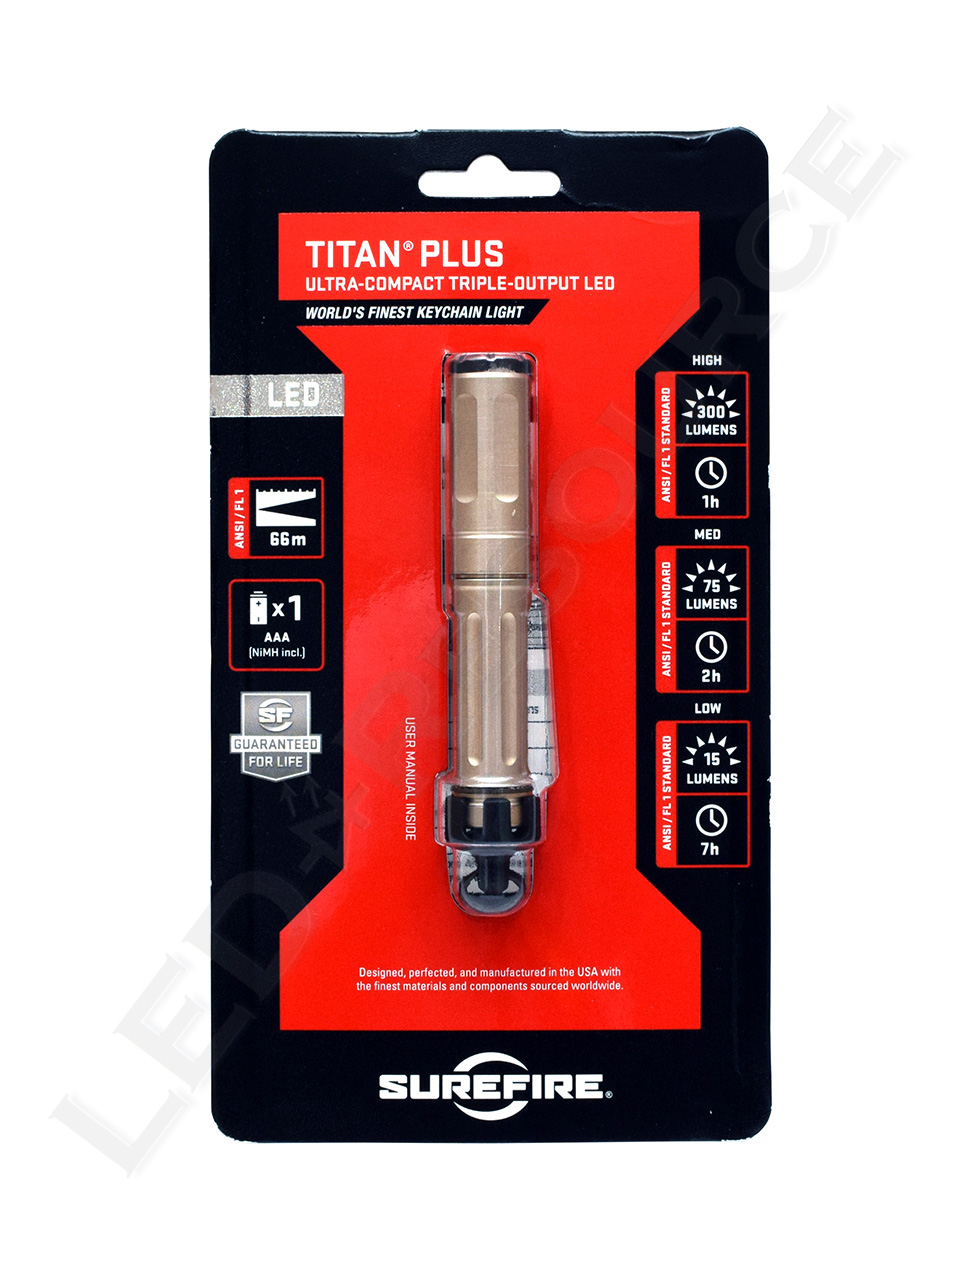 Surefire Titan Plus Factory Sale, SAVE 60%.